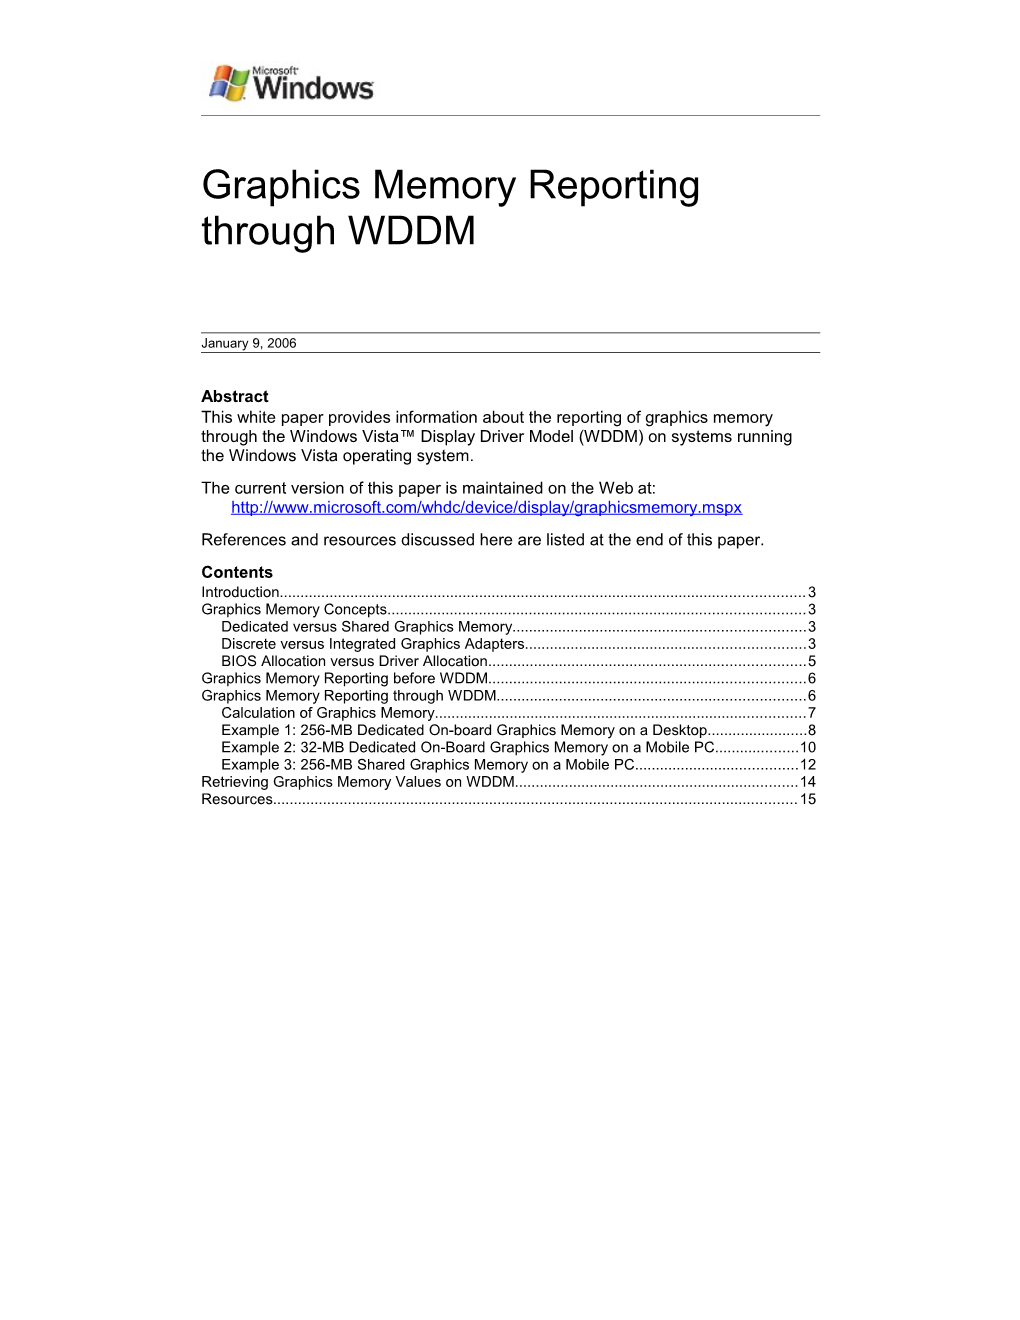 Graphics Memory Reporting in WDDM